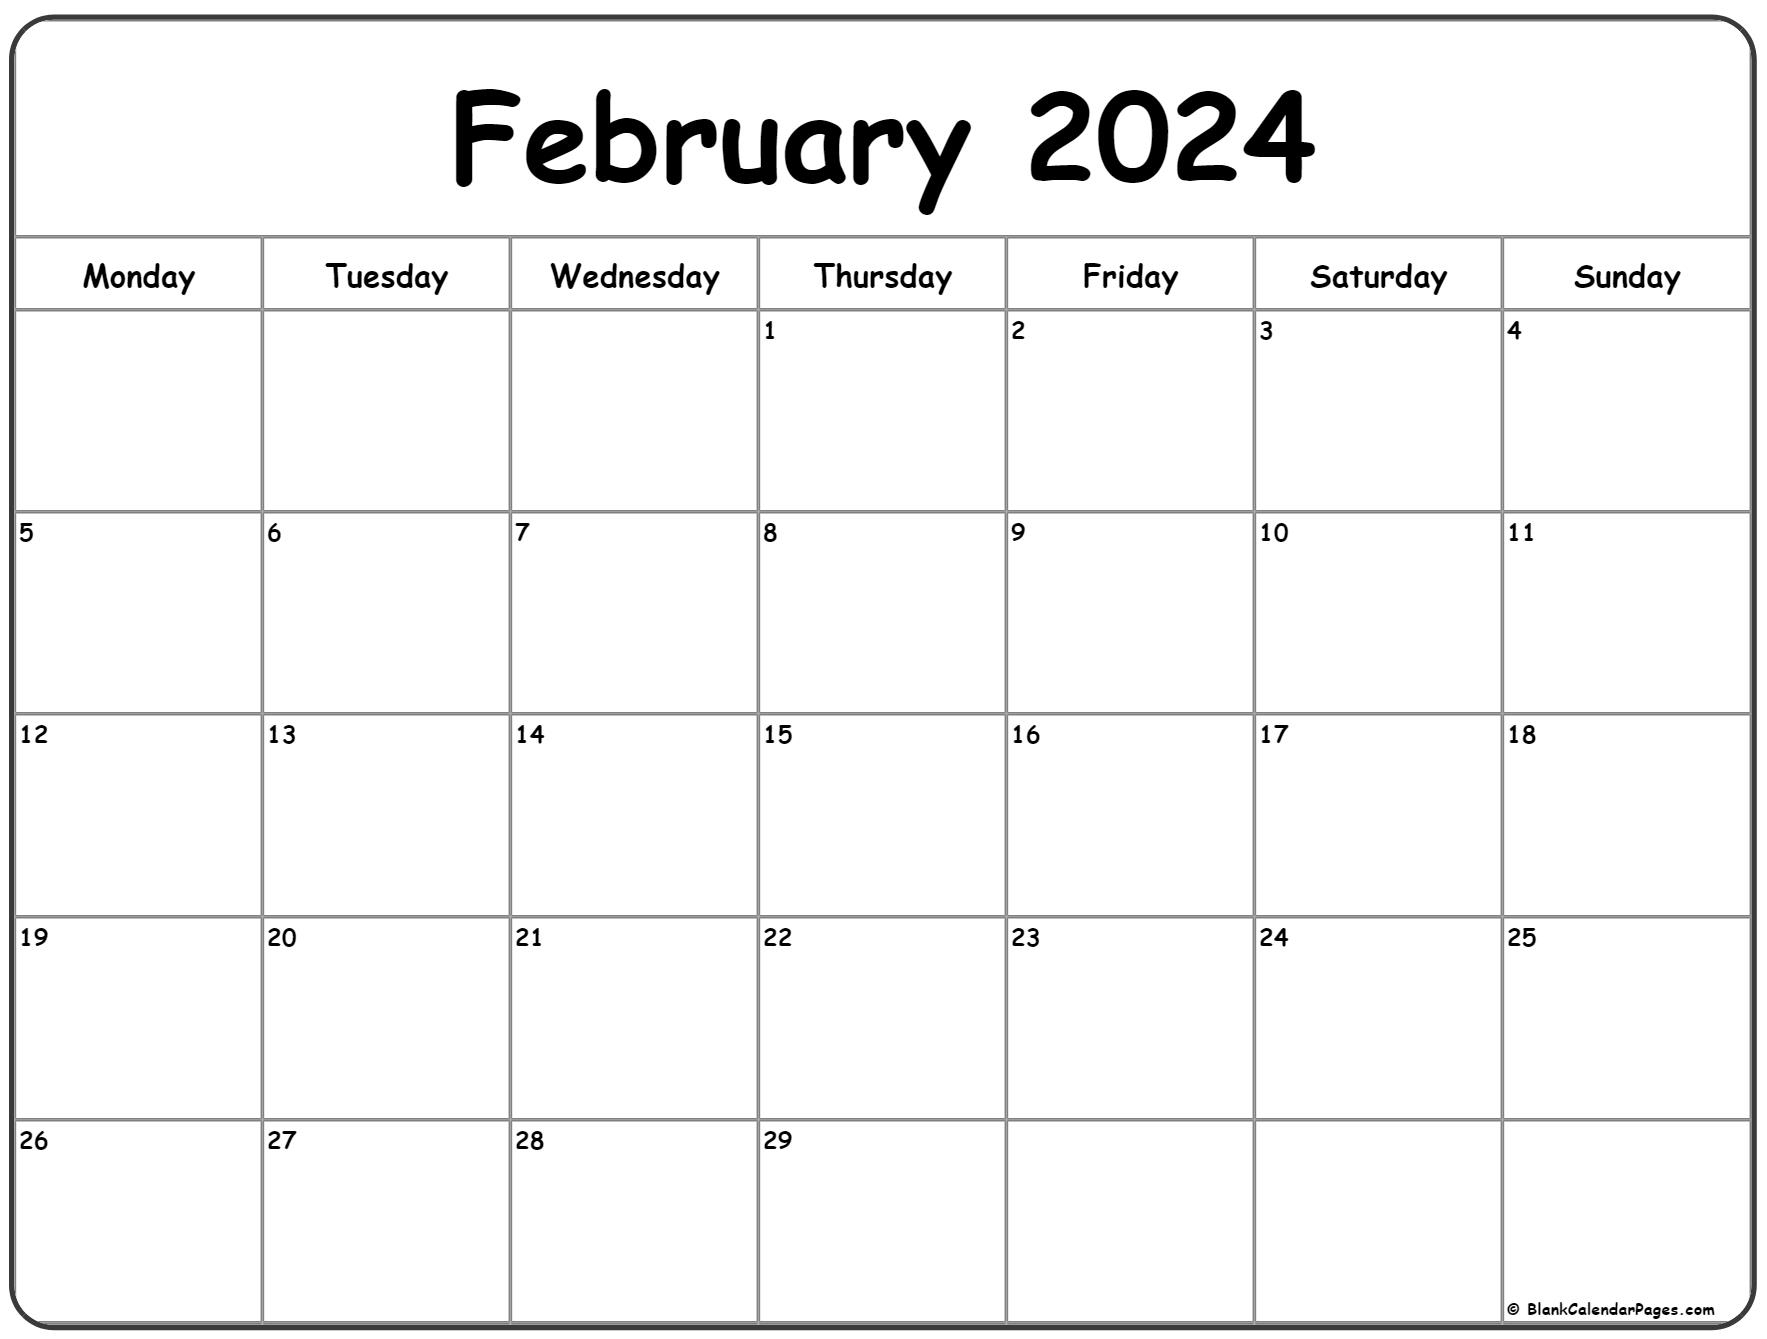 February 2024 Monday Calendar | Monday To Sunday for Printable Calendar For Feb 2024